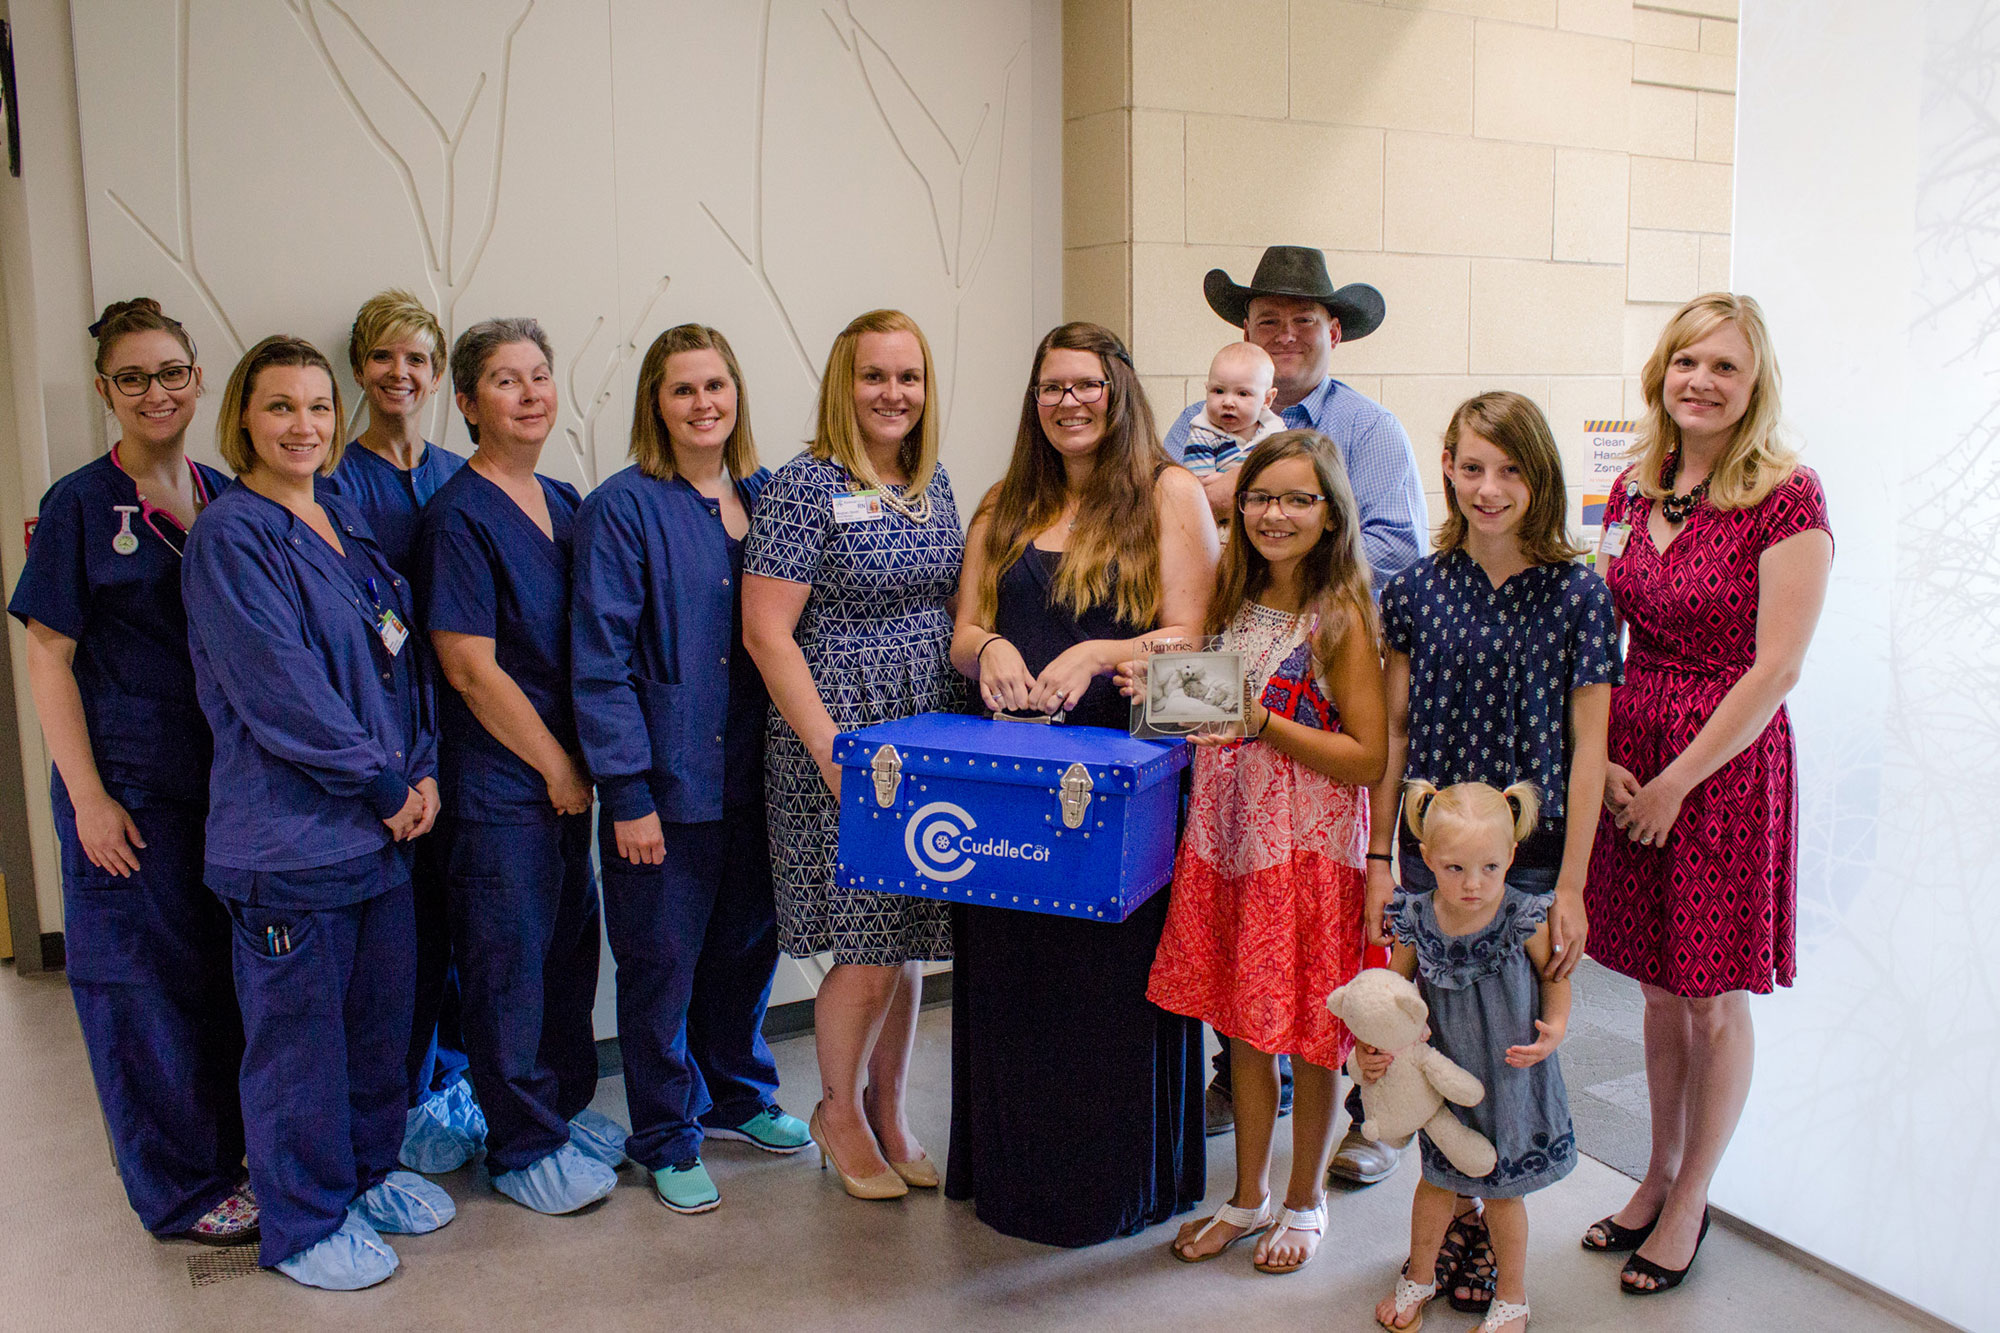 Staples Family donates Cuddle Cot to Kootenai Health Family Birth Center